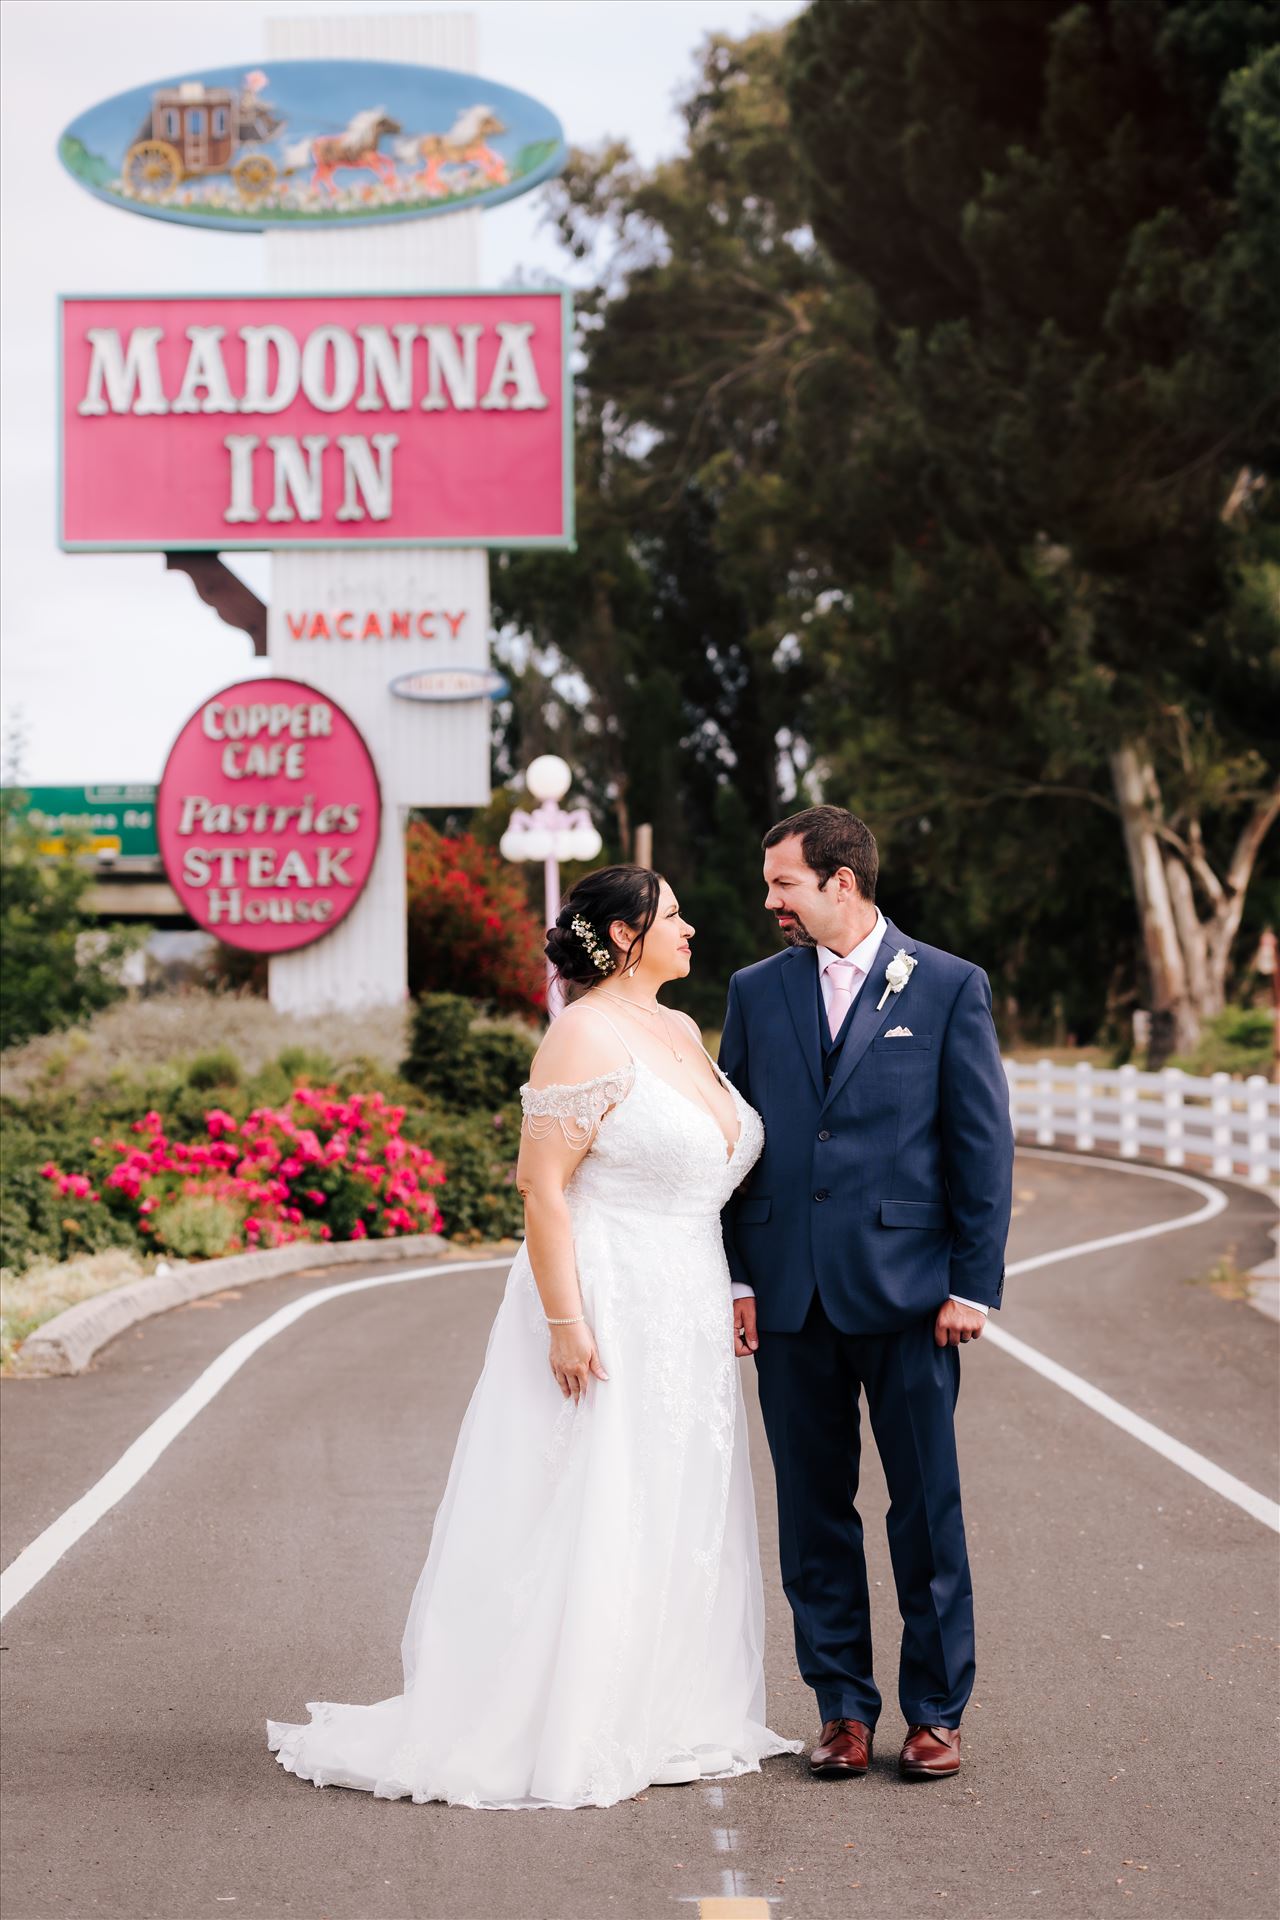 Sneak Peek--11.JPG - Mirror's Edge Wedding Photography, a San Luis Obispo and Santa Barbara County photographer capture the Nagy's Madonna Inn Wedding. Madonna Inn Sign. by Sarah Williams